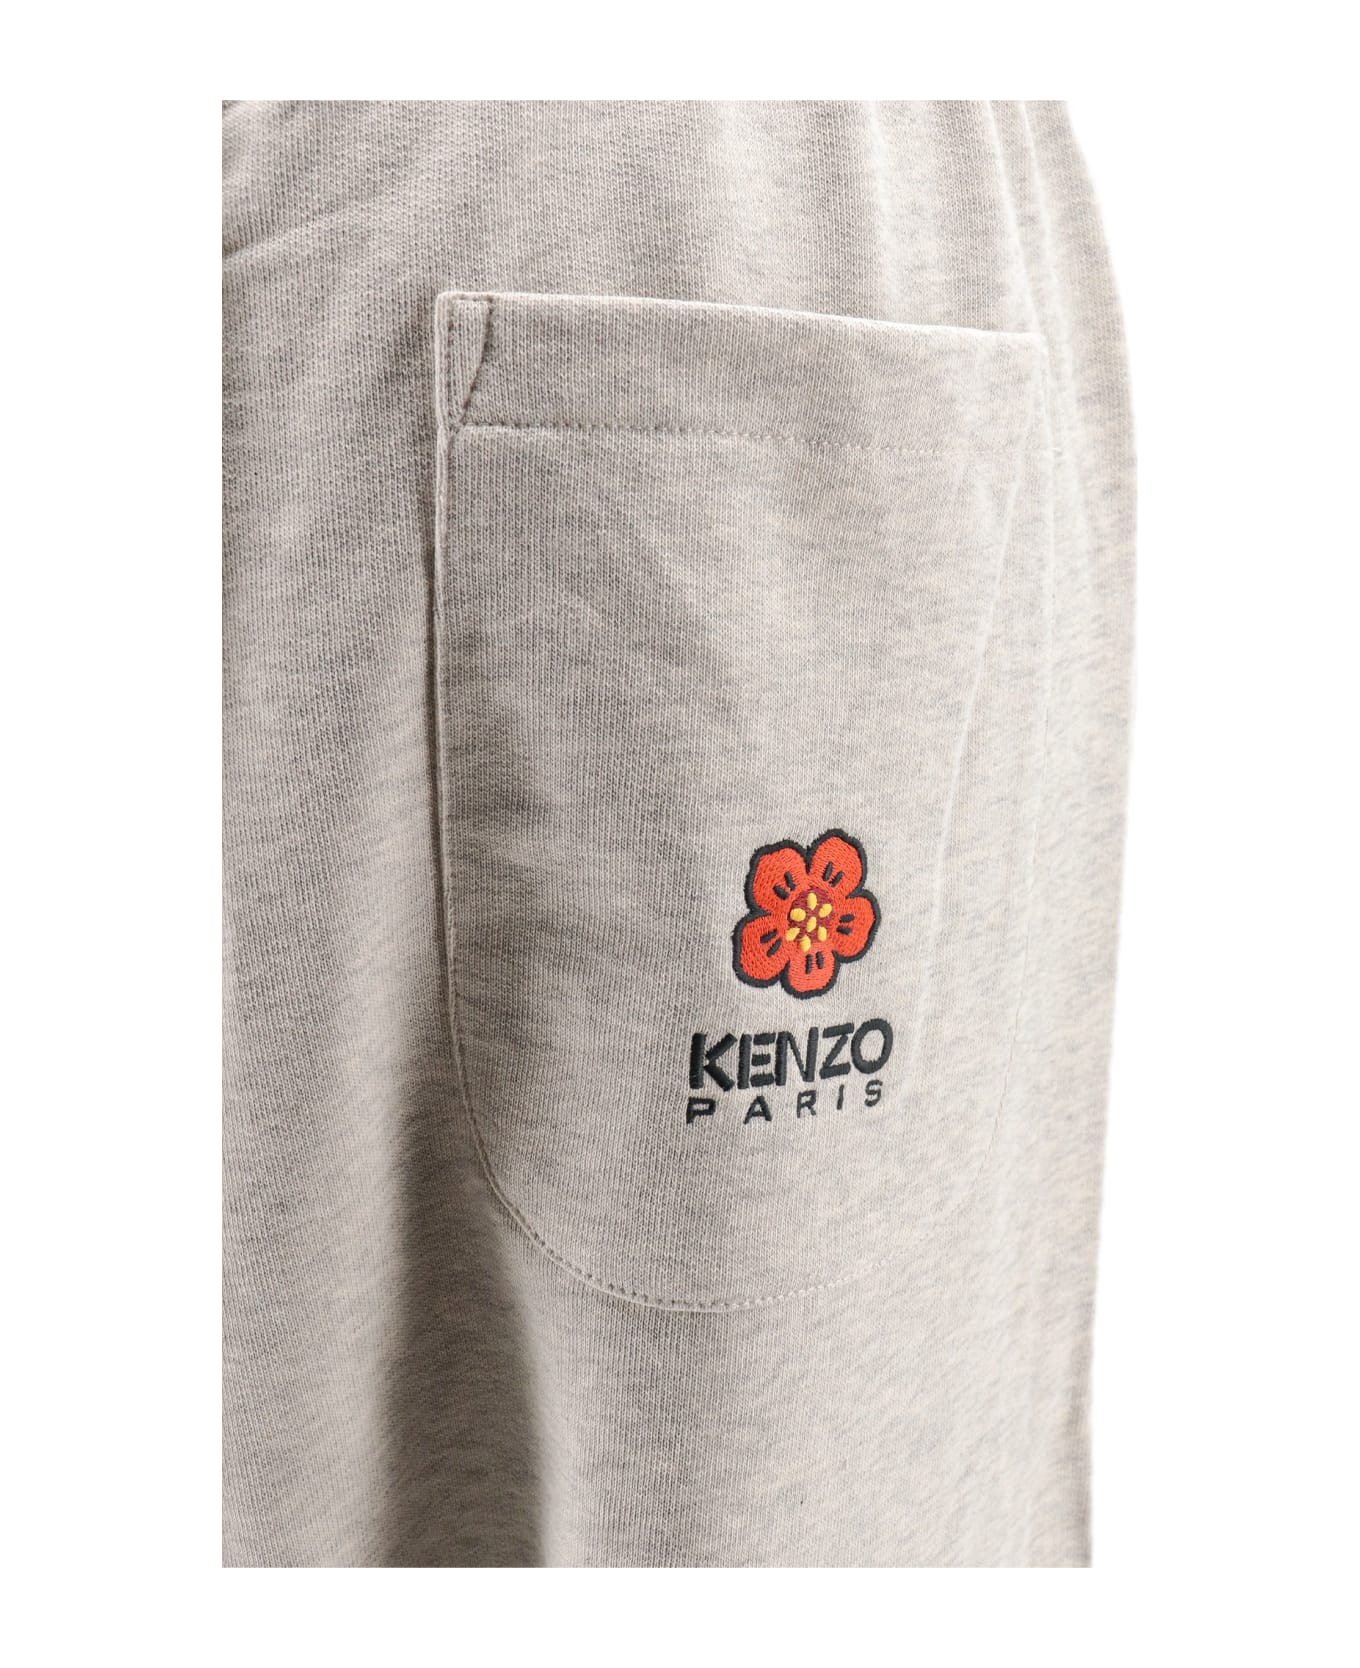 Kenzo Trouser Pants - Gris Clair スウェットパンツ